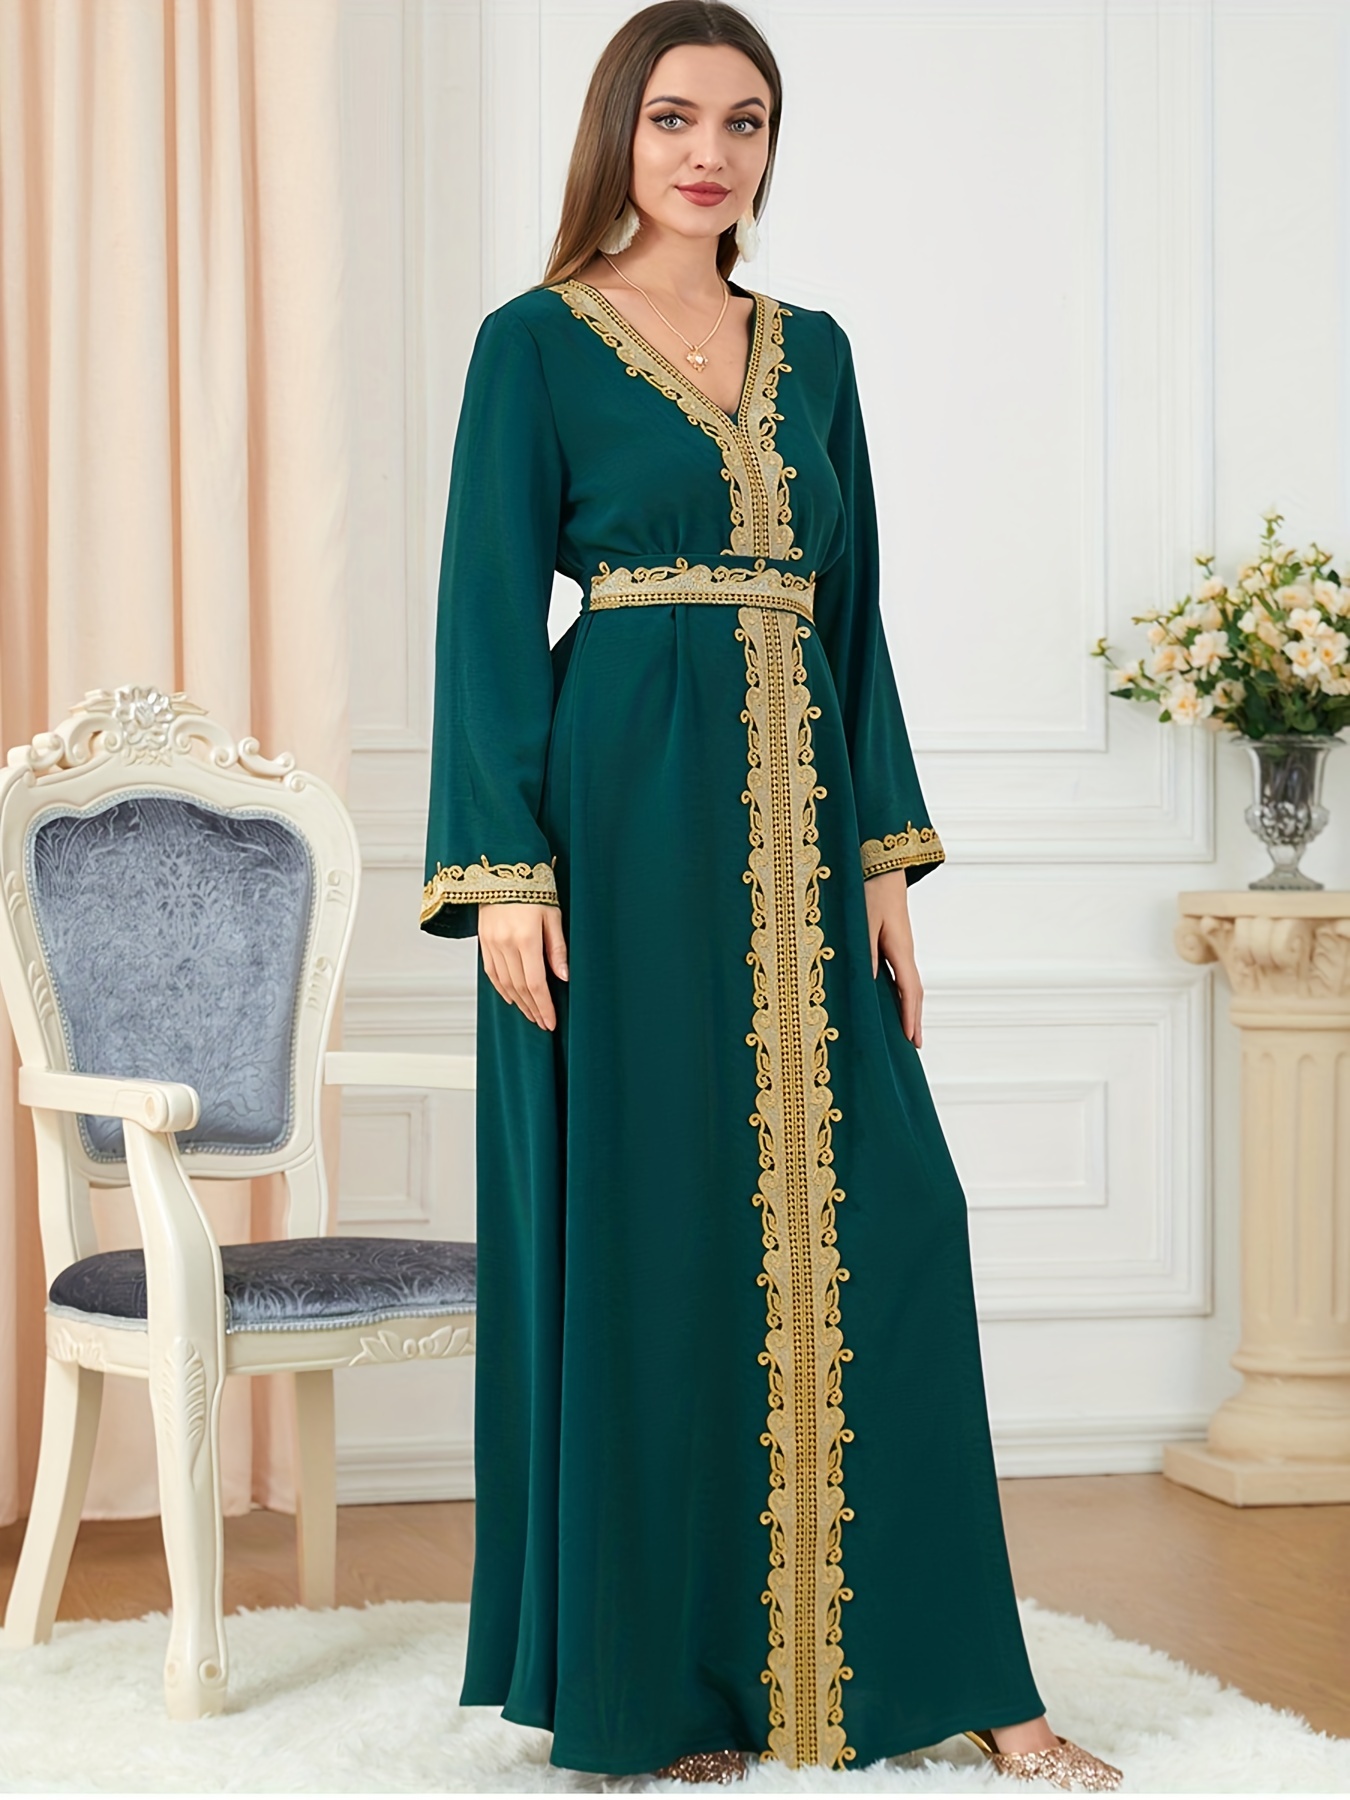 Lace Trim Kaftan Dress Elegant V Neck Long Sleeve Maxi Dress 